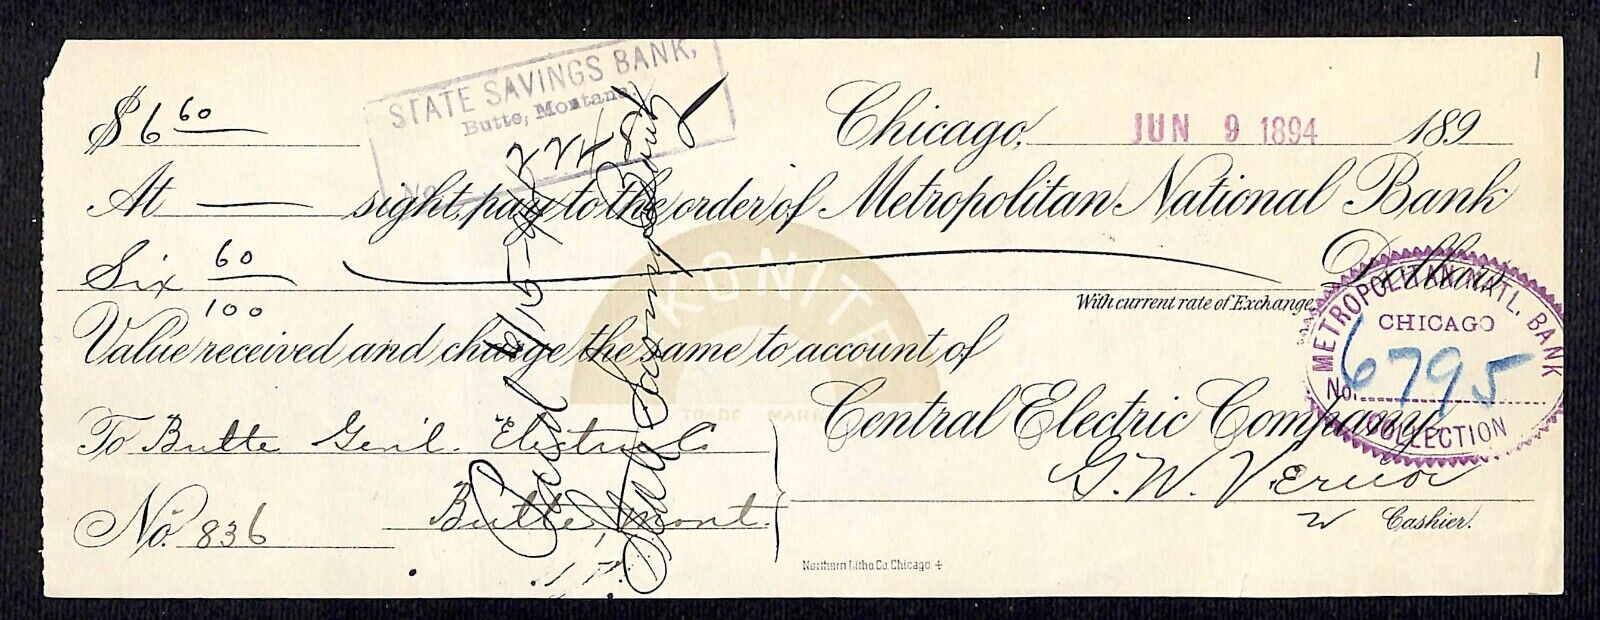 Central Electric Company Chicago Bank Check 1894 w/ Okanite - Scarce